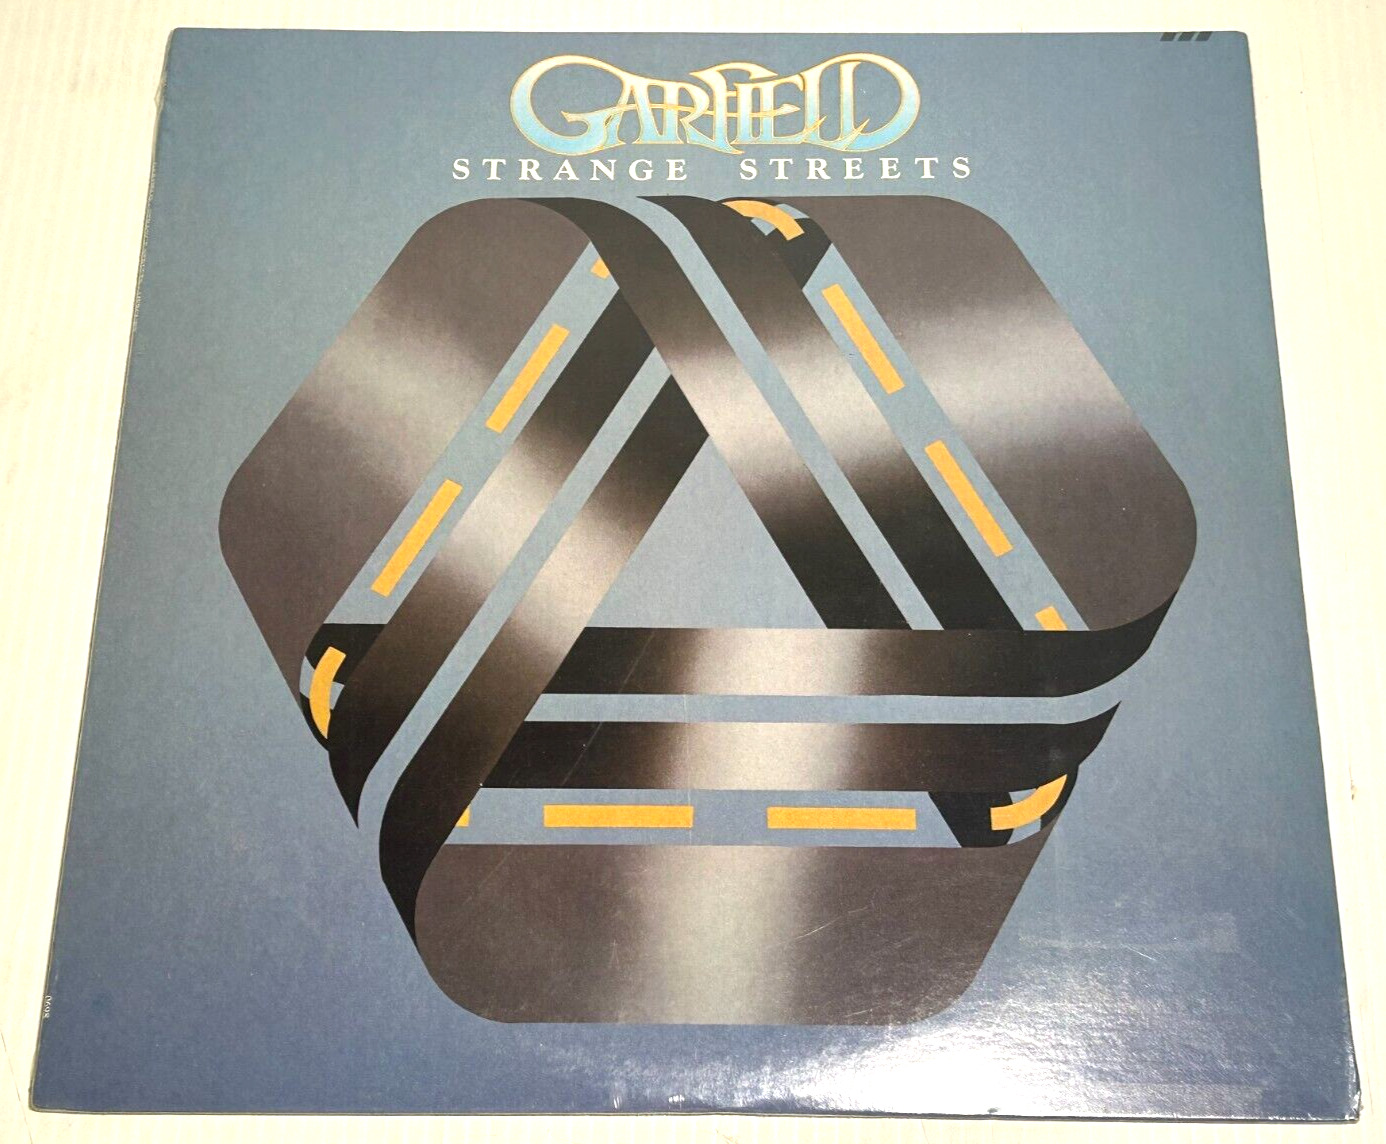 SEALED GARFIELD STRANGE STREETS 1976 LP PROG ROCK MERCURY SRM-A-1082